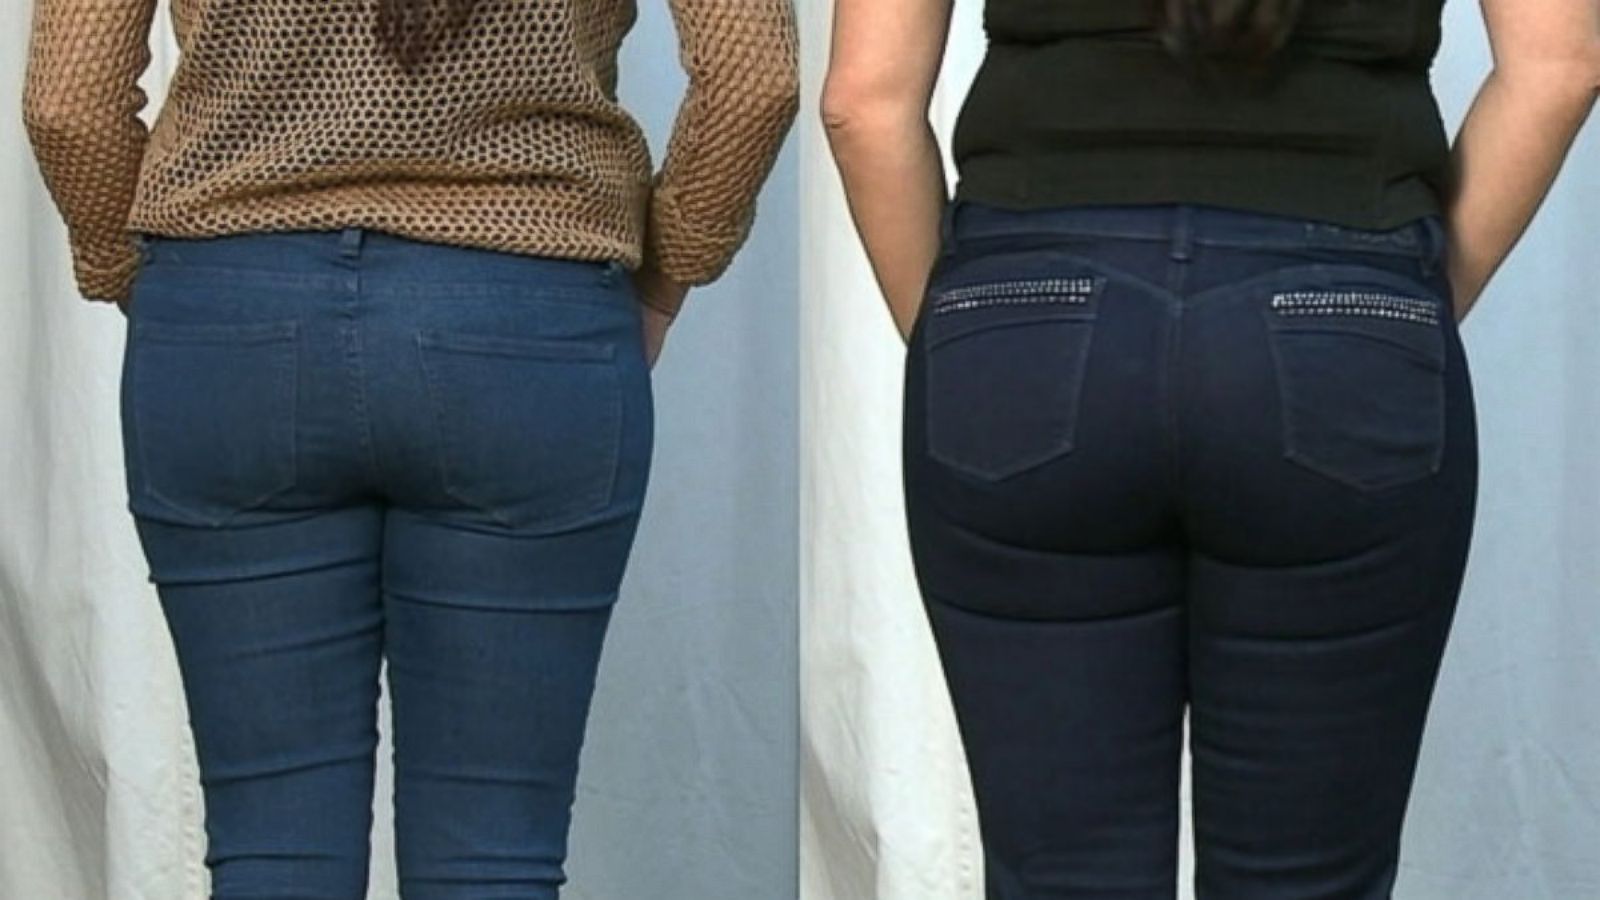 Women's clothes: Colombian Jeans, Pants - Push up